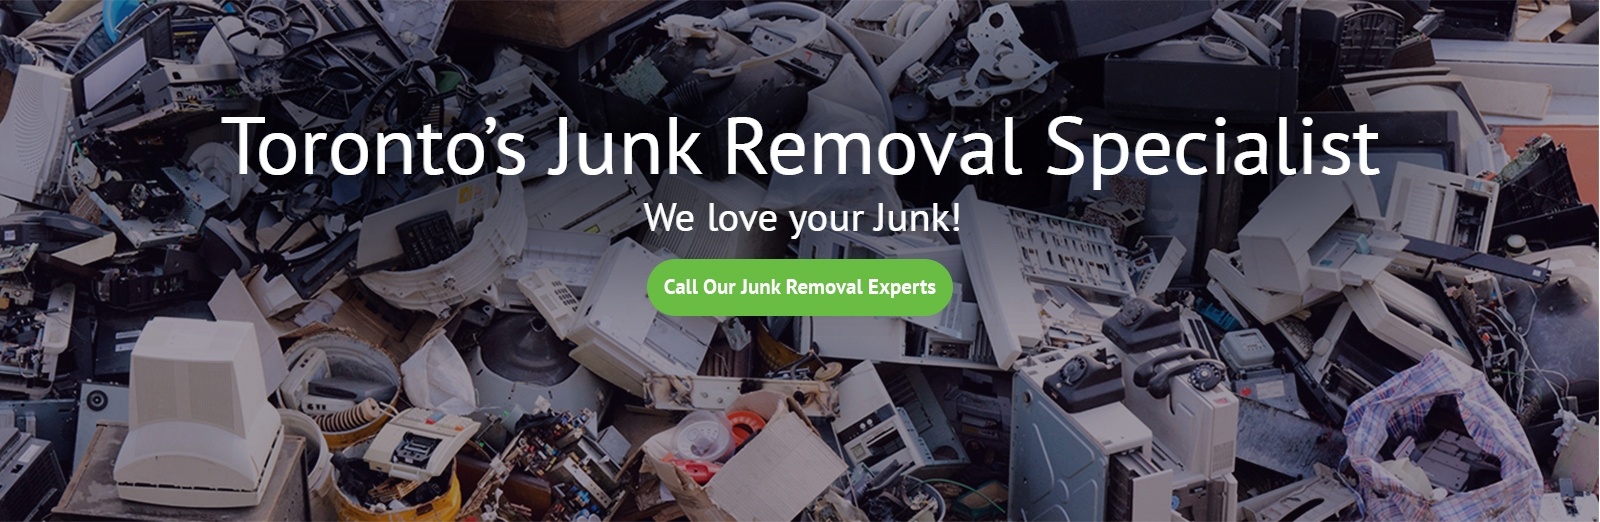 Professional Junk Removal Toronto